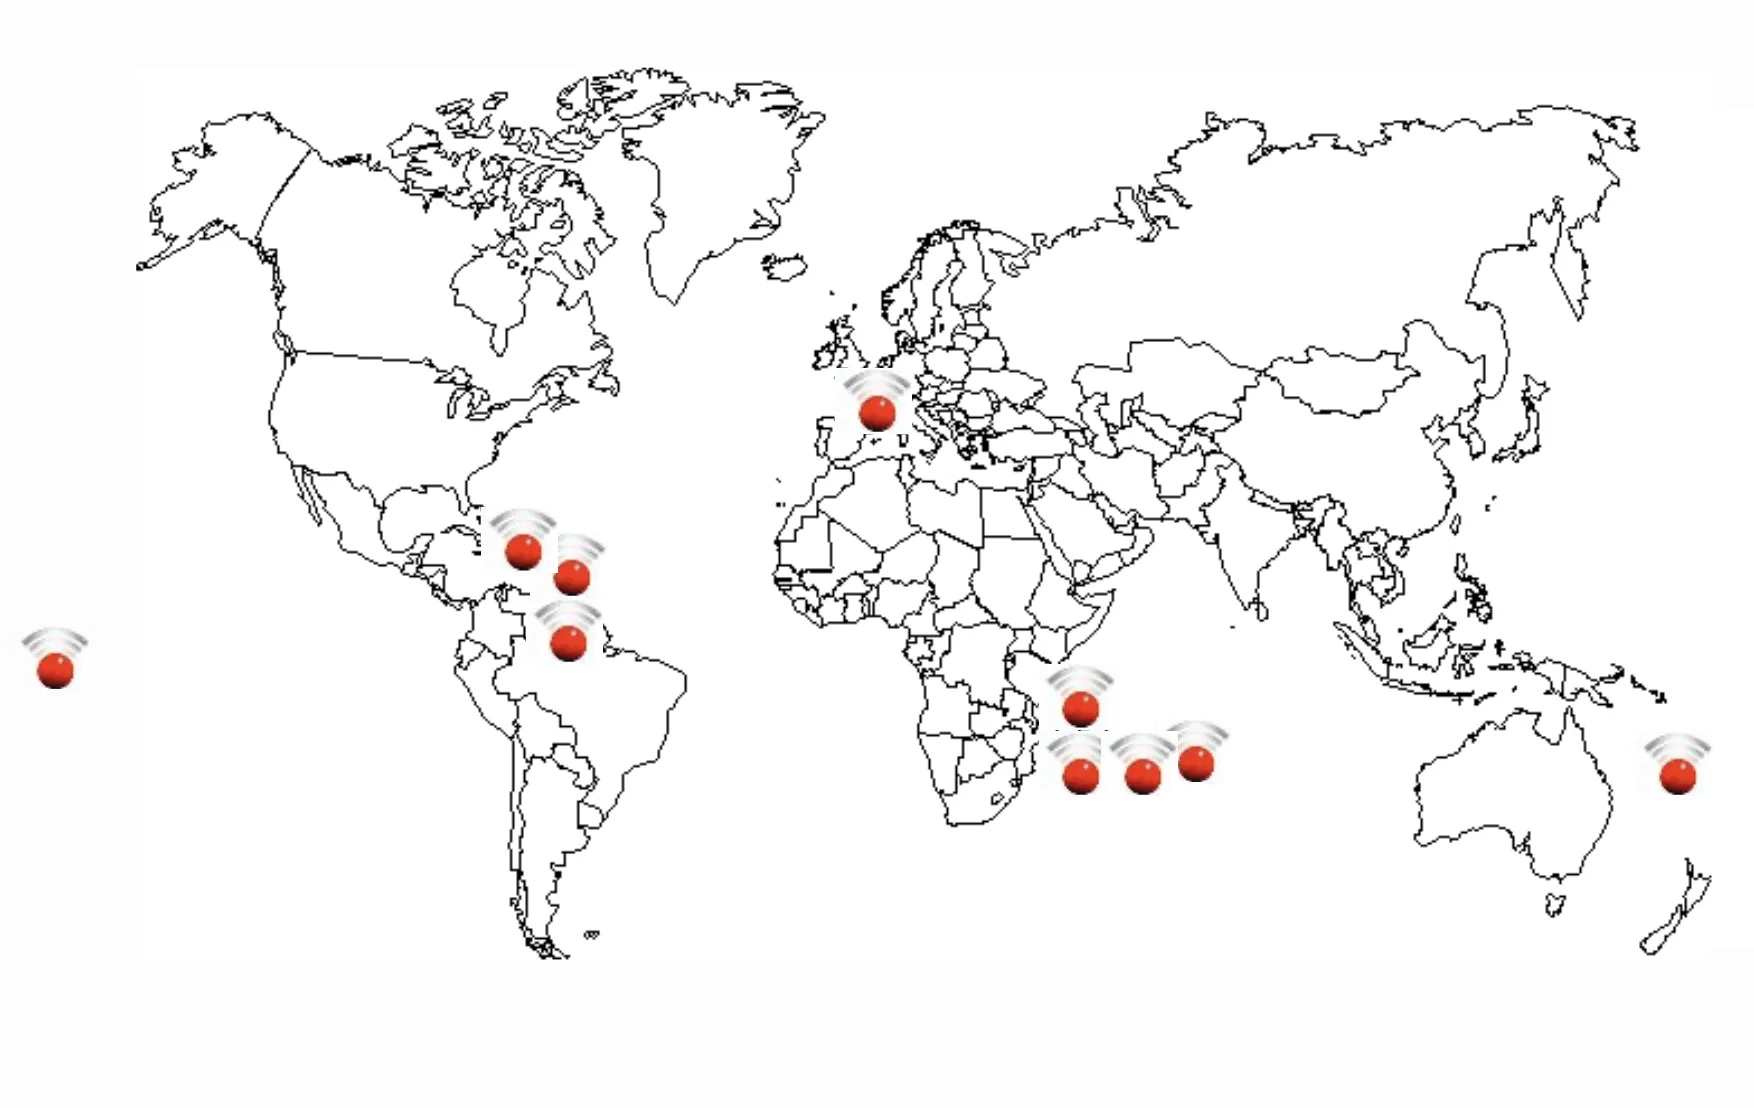 Carte mondiale des implantations de visioconférence par ALCOM